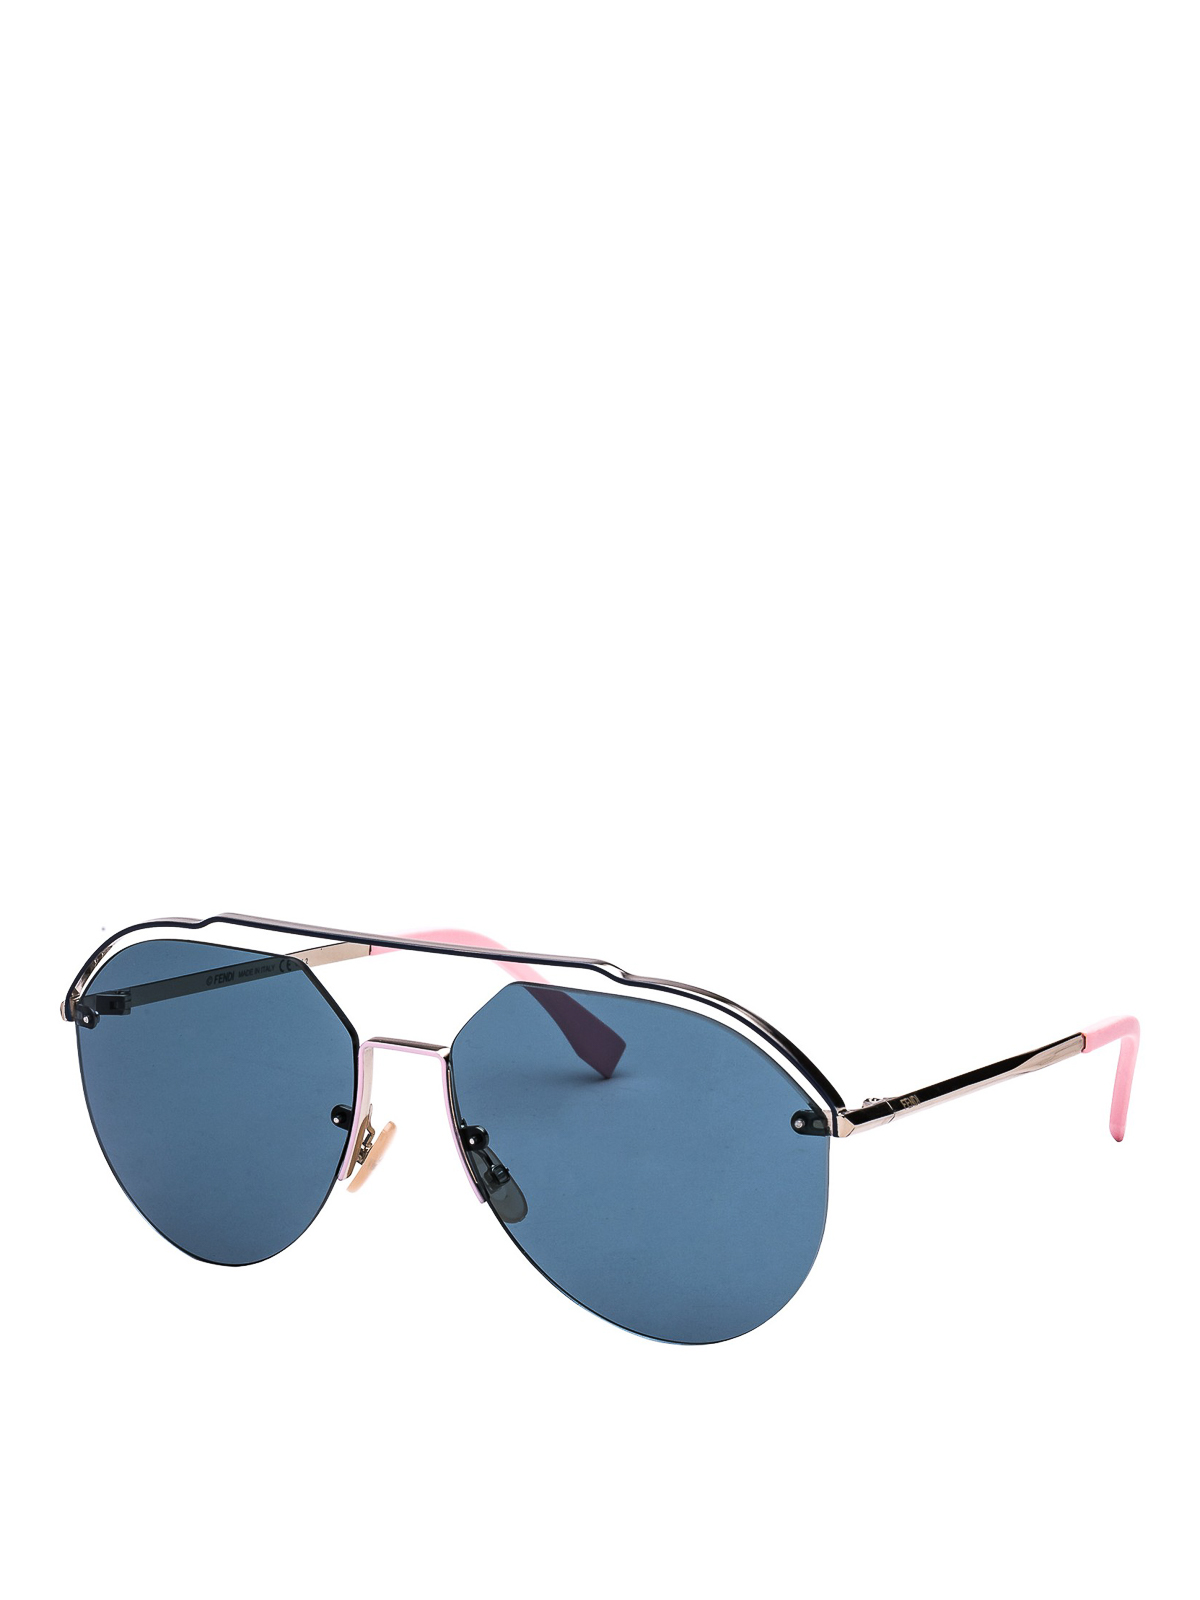 blue fendi sunglasses